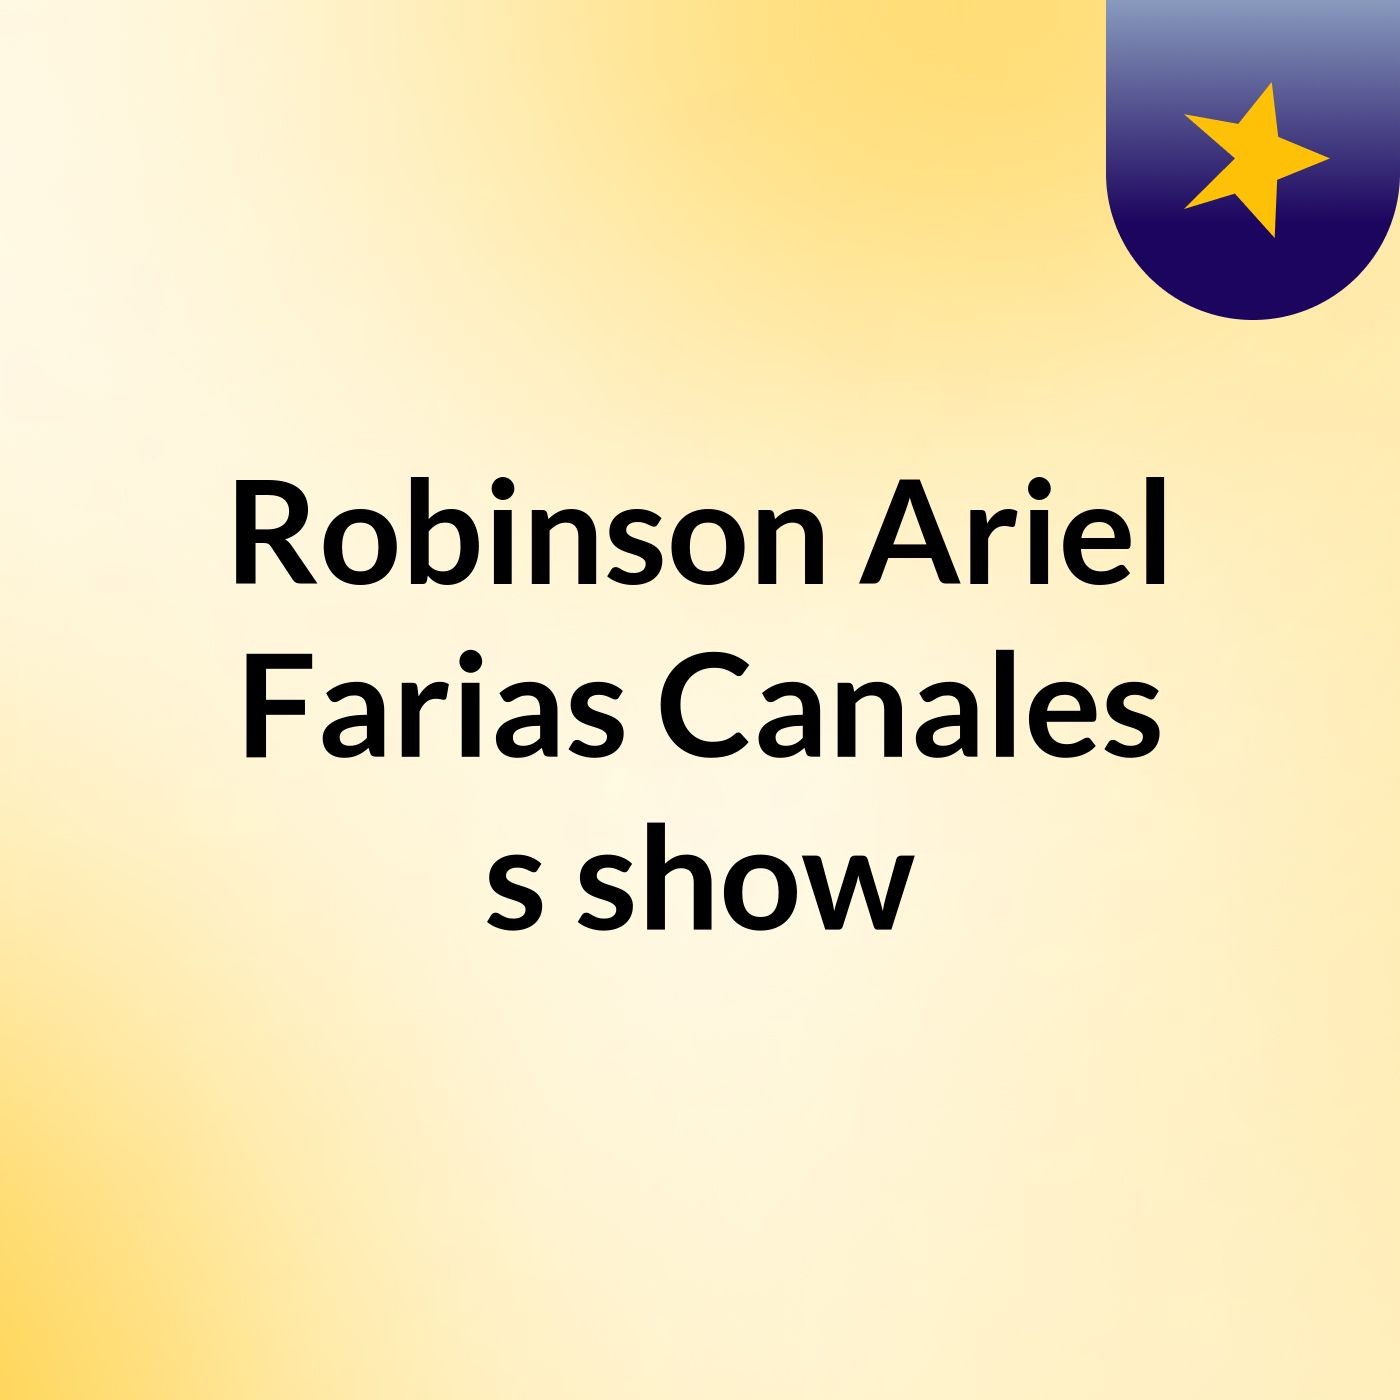 Robinson Ariel Farias Canales's show